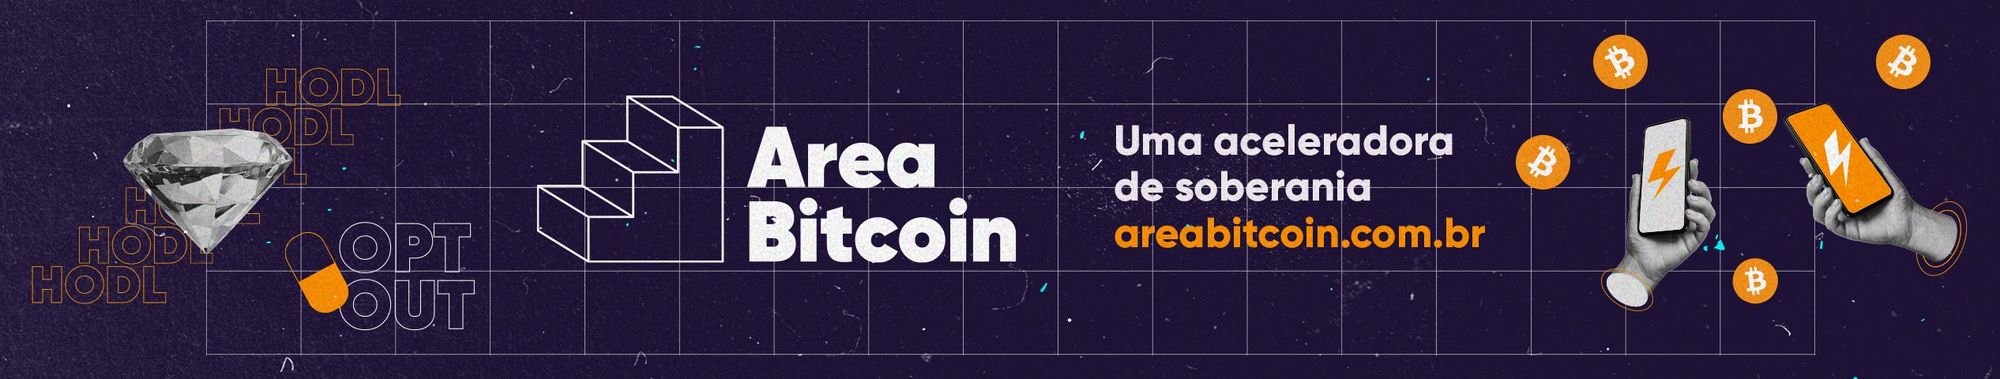 Area Bitcoin Banner